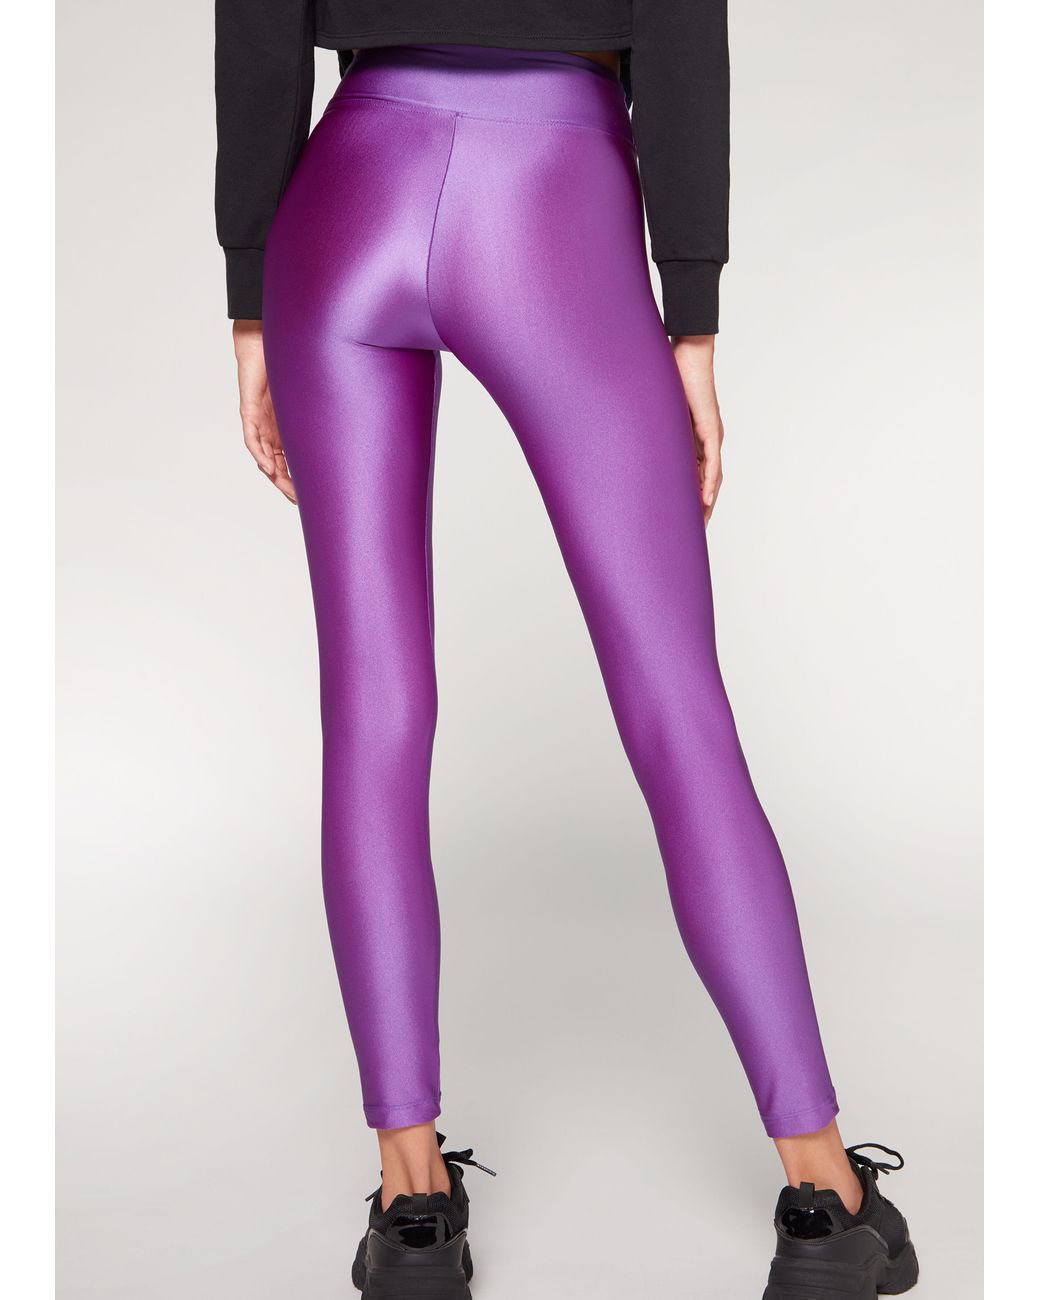 Calzedonia Super Shiny leggings in Purple